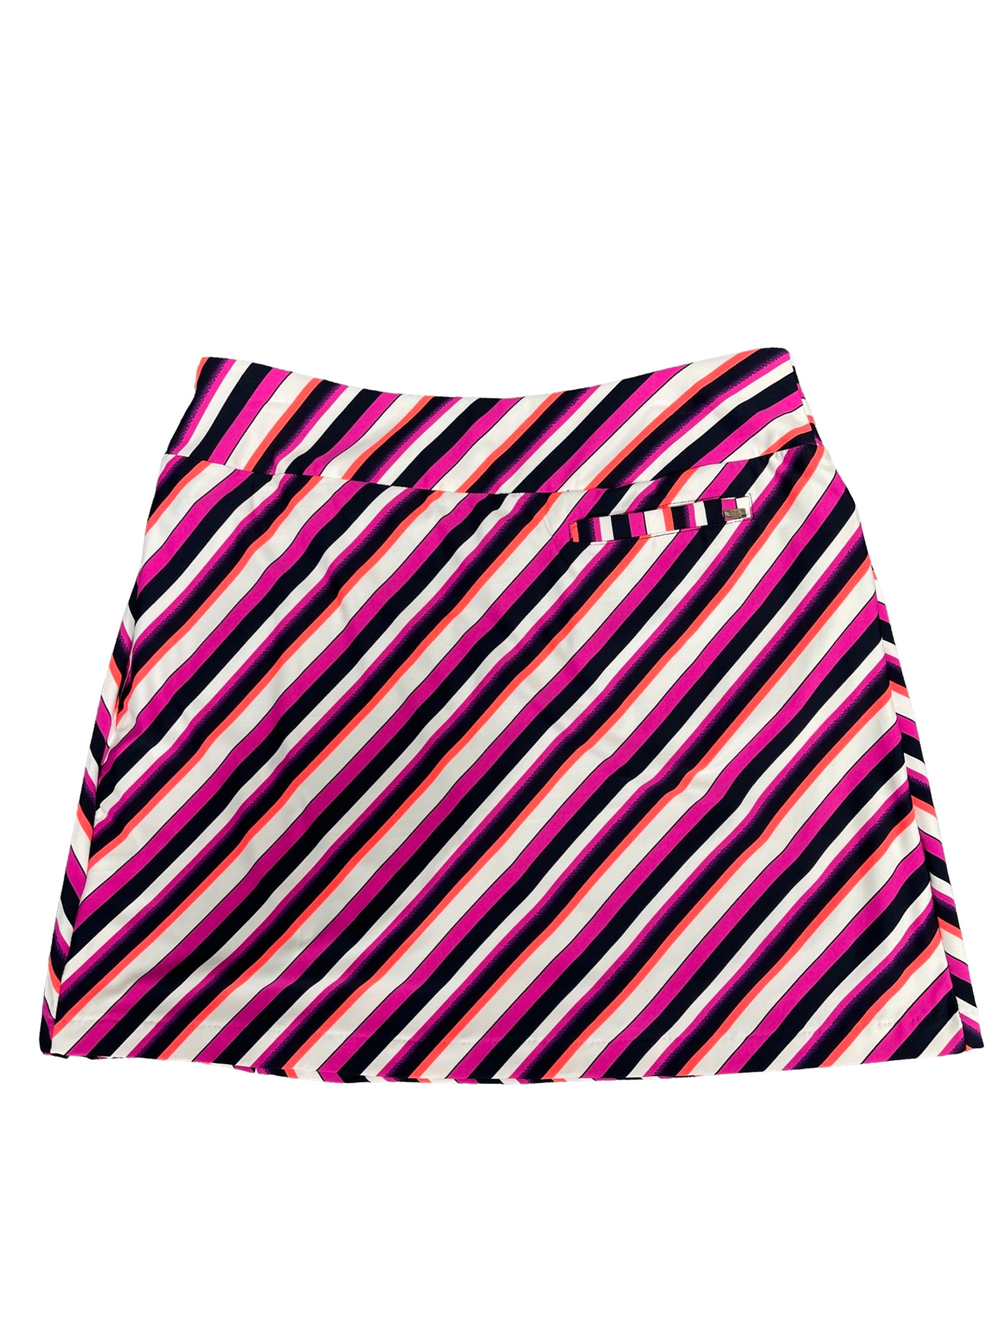 Tail Striped Skort - Multicolor - Size Medium - Skorzie